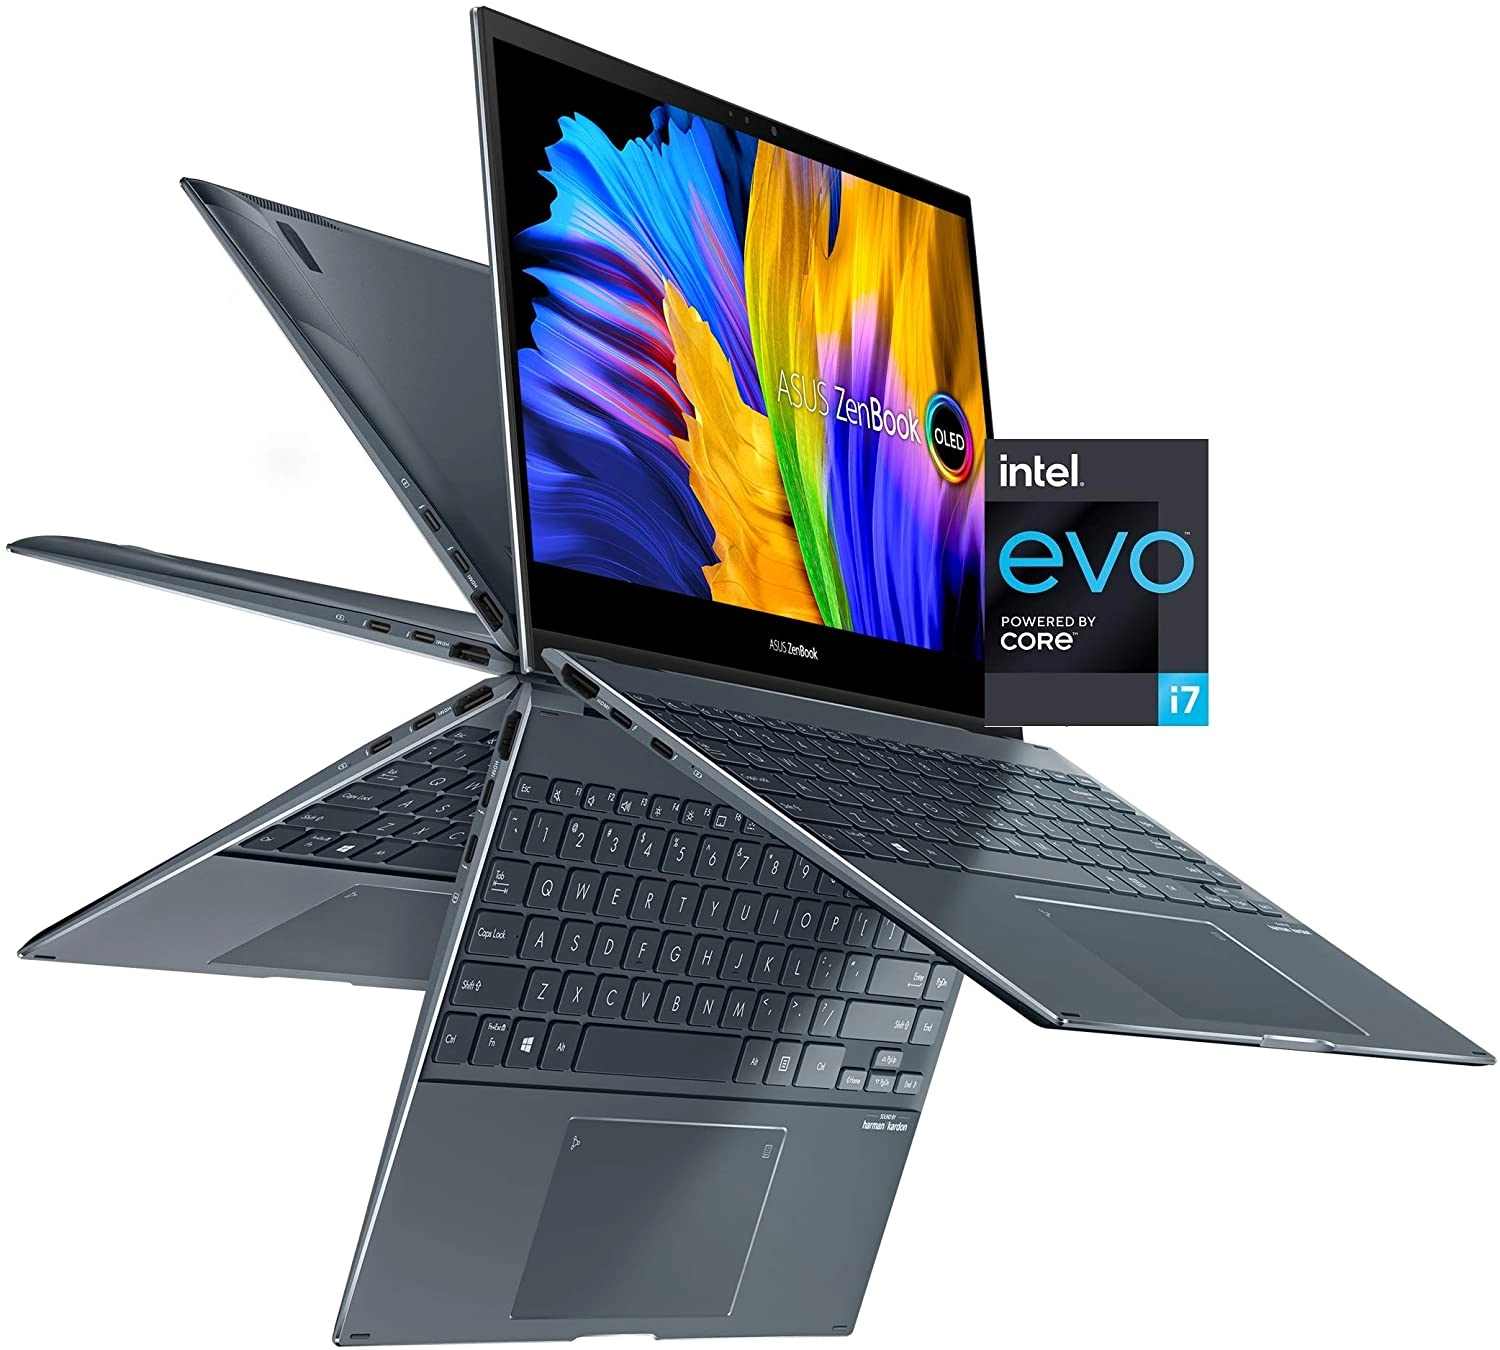 Asus ZenBook Flip 13 OLED laptop image